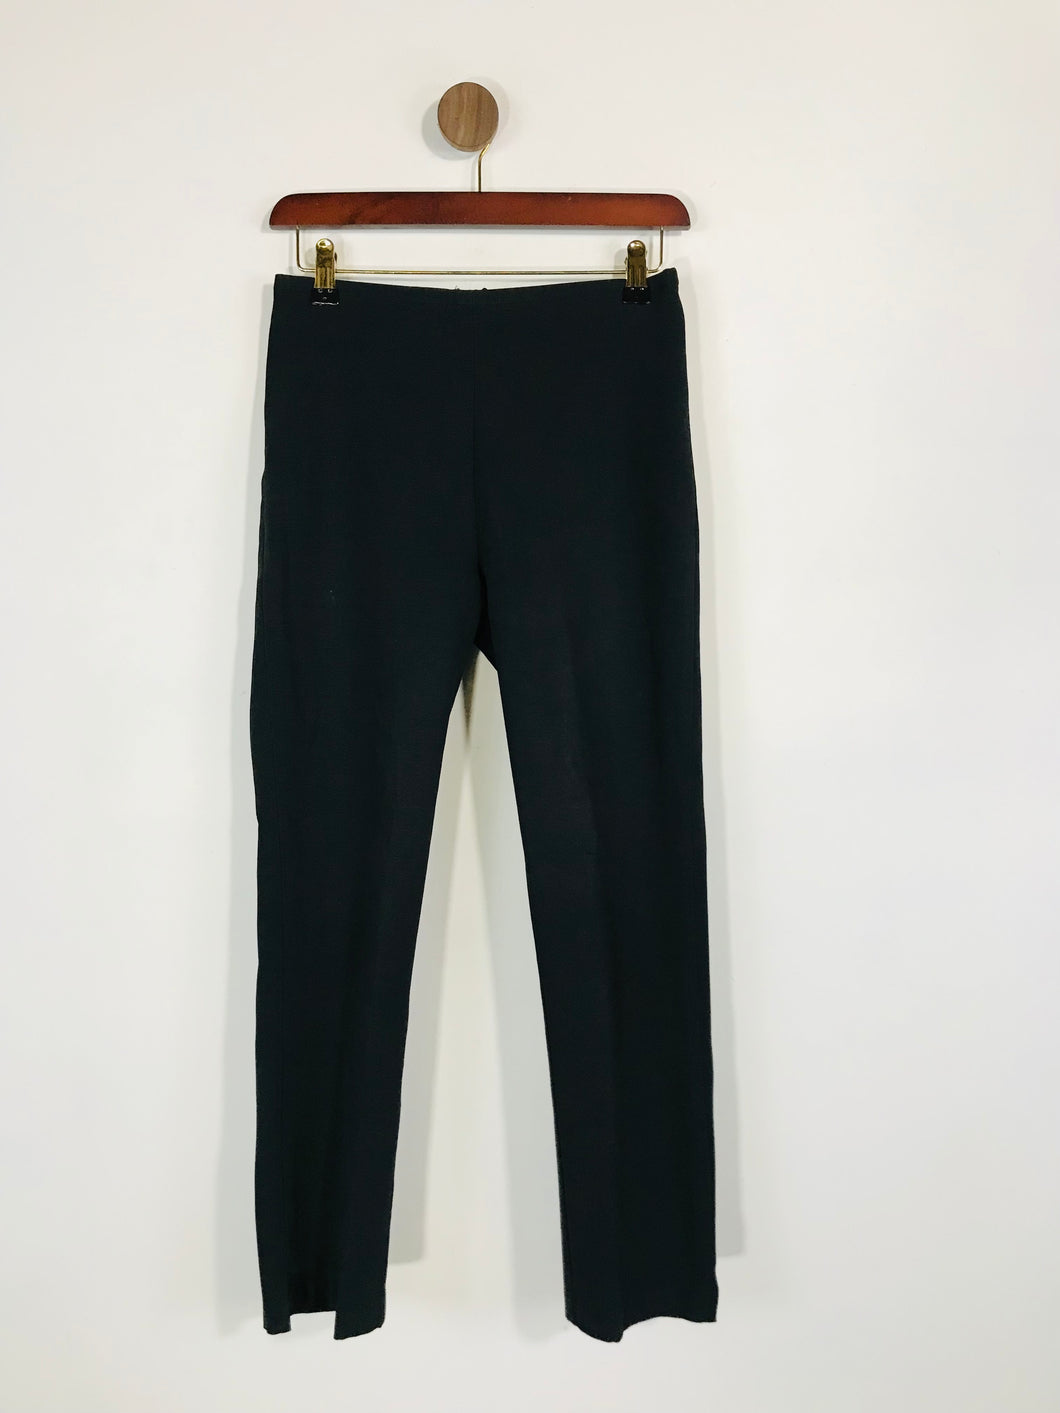 Toby Lerner Women's Vintage Smart Trousers | M UK10-12 | Black